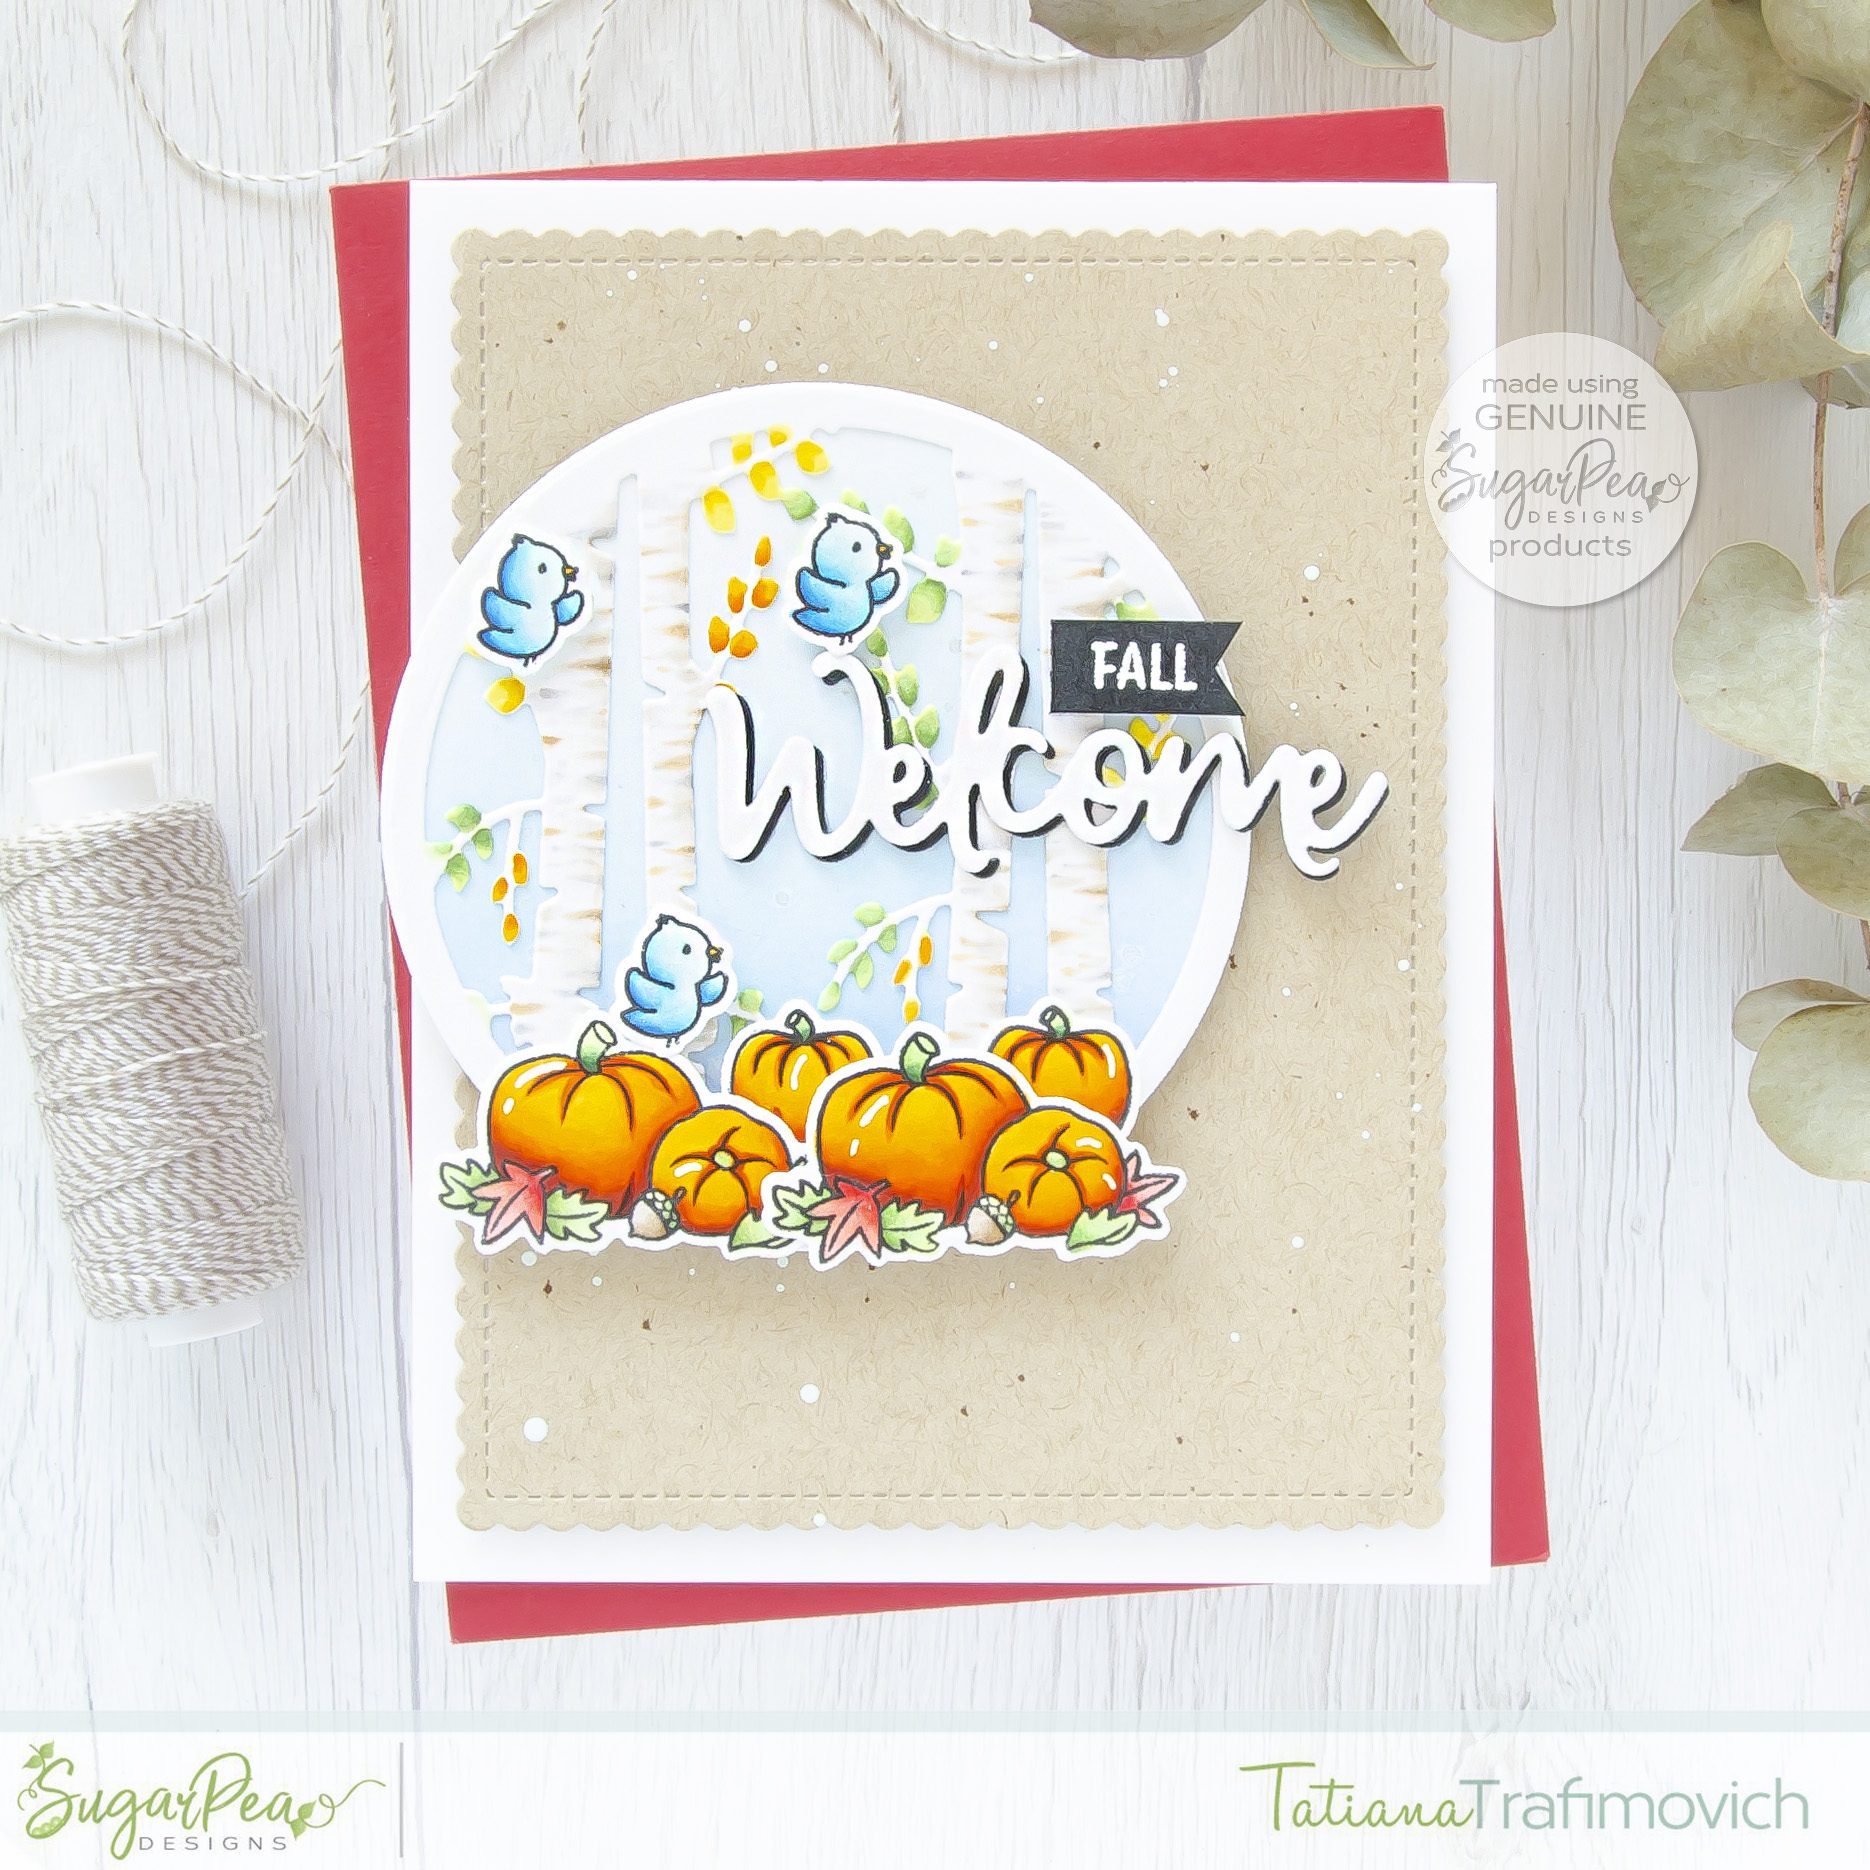 Welcome Fall #handmade card by Tatiana Trafimovich #tatianacraftandart - Birch Forest SugarCut by SugarPea Designs #sugarpeadesigns